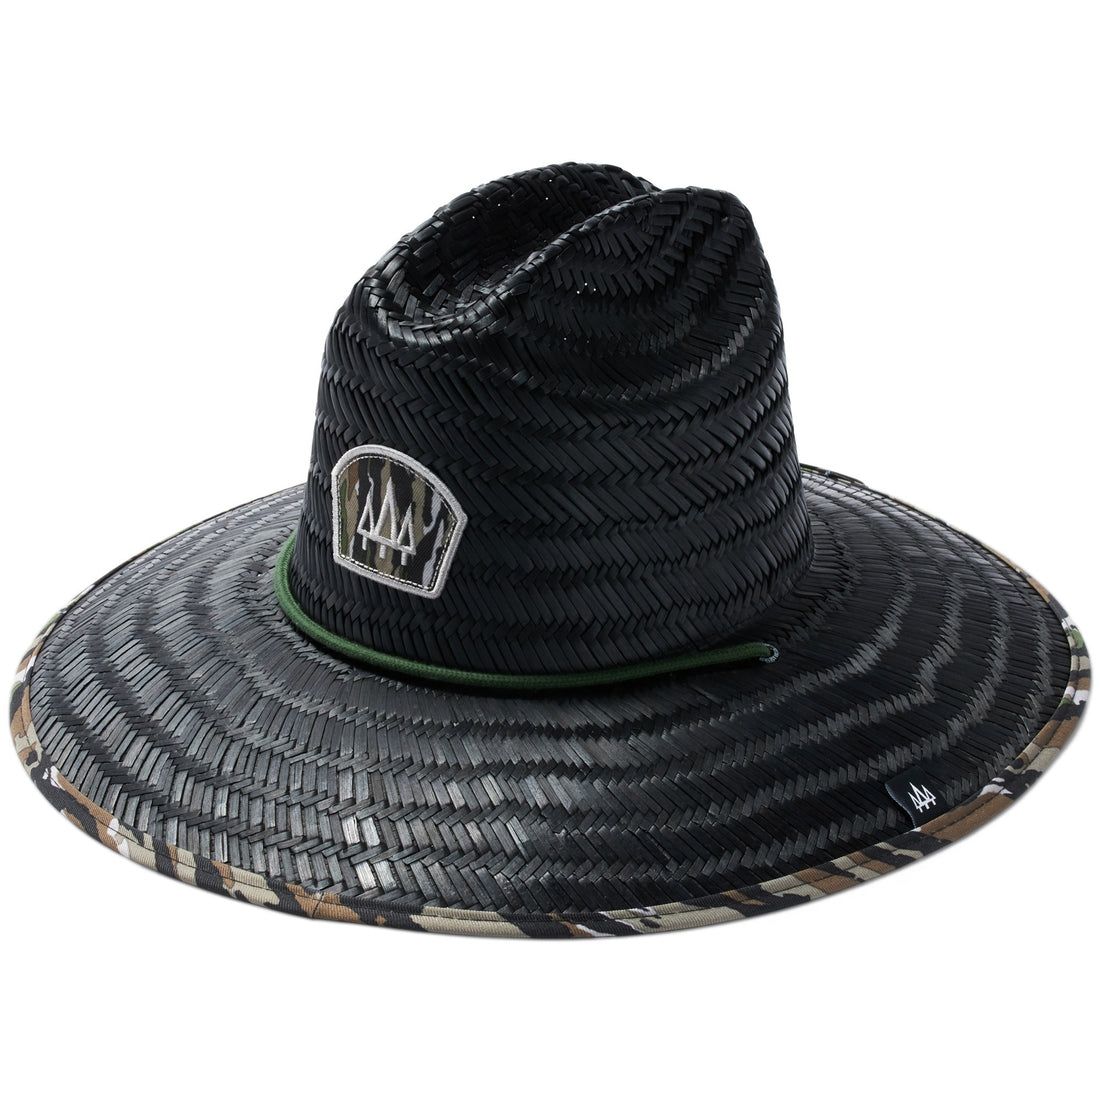 Blackout Straw Lifeguard Hat, Black Print Straw Hat UPF 50+